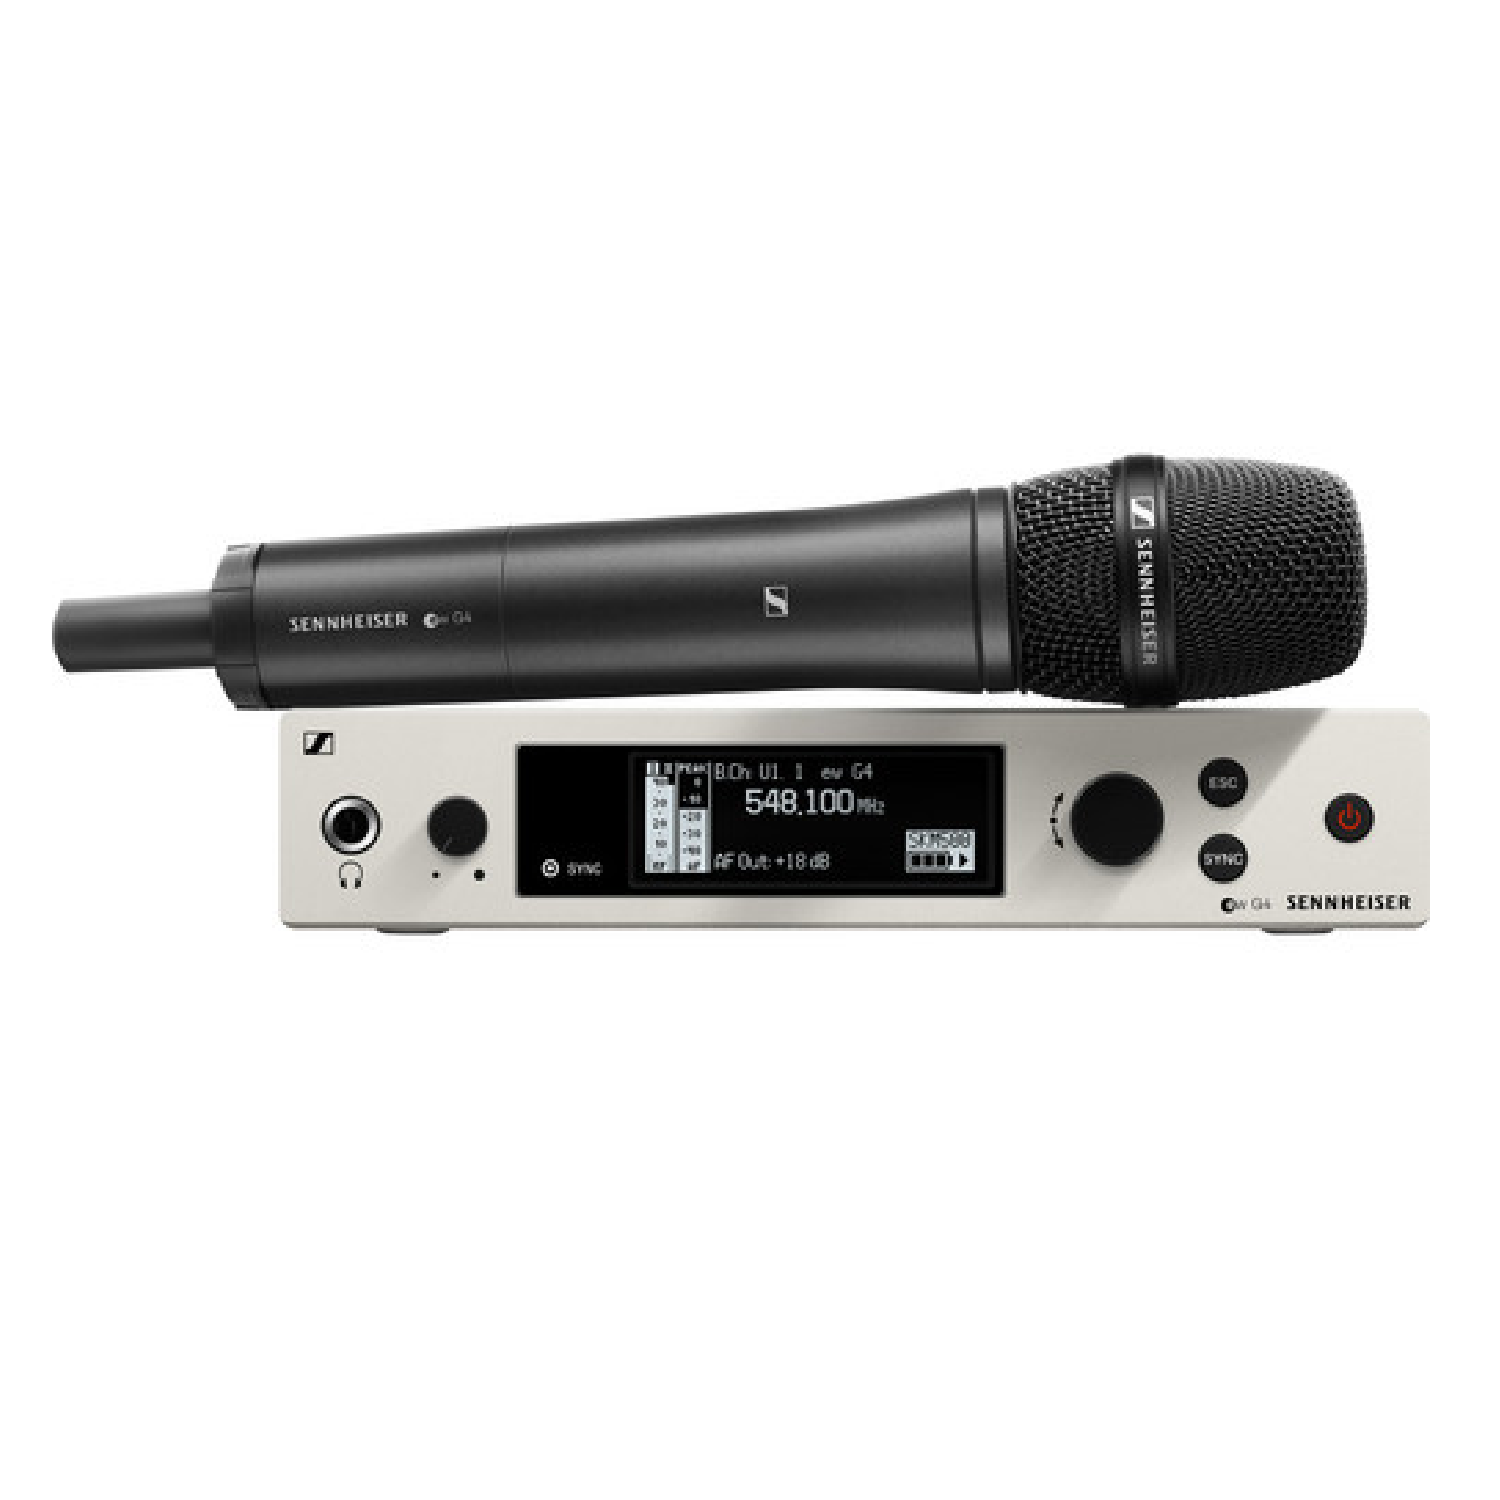 Wireless Handheld Microphone System with MMD 945 Capsule - Bw: 626 - 698 MHz   EW 500 G4 945 Bw sennheiser